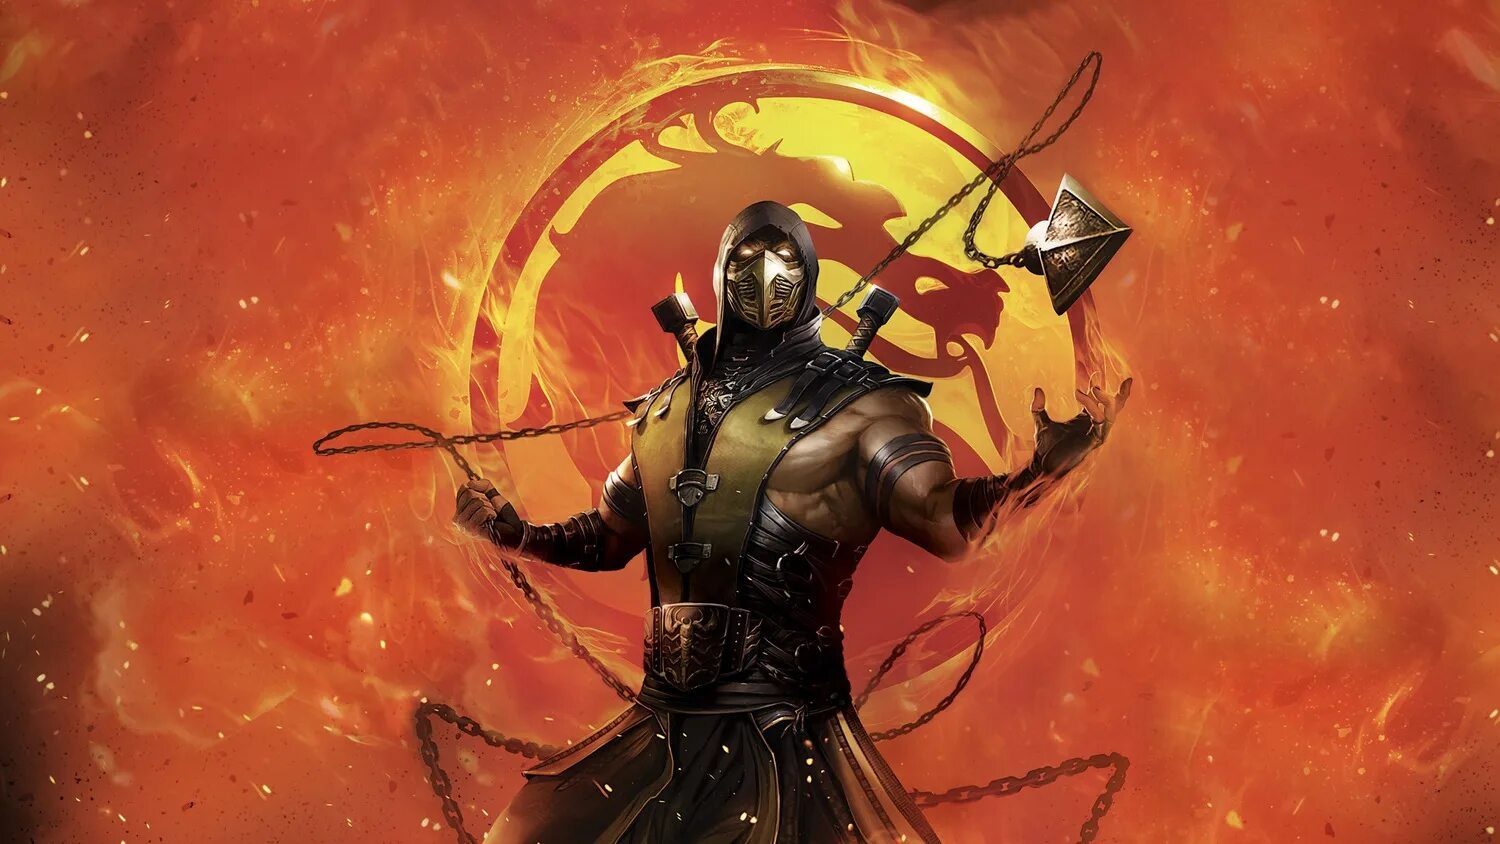 Скорпион дата выхода. Мортал комбат битва скорпиона. Mortal Kombat 2021 Скорпион.